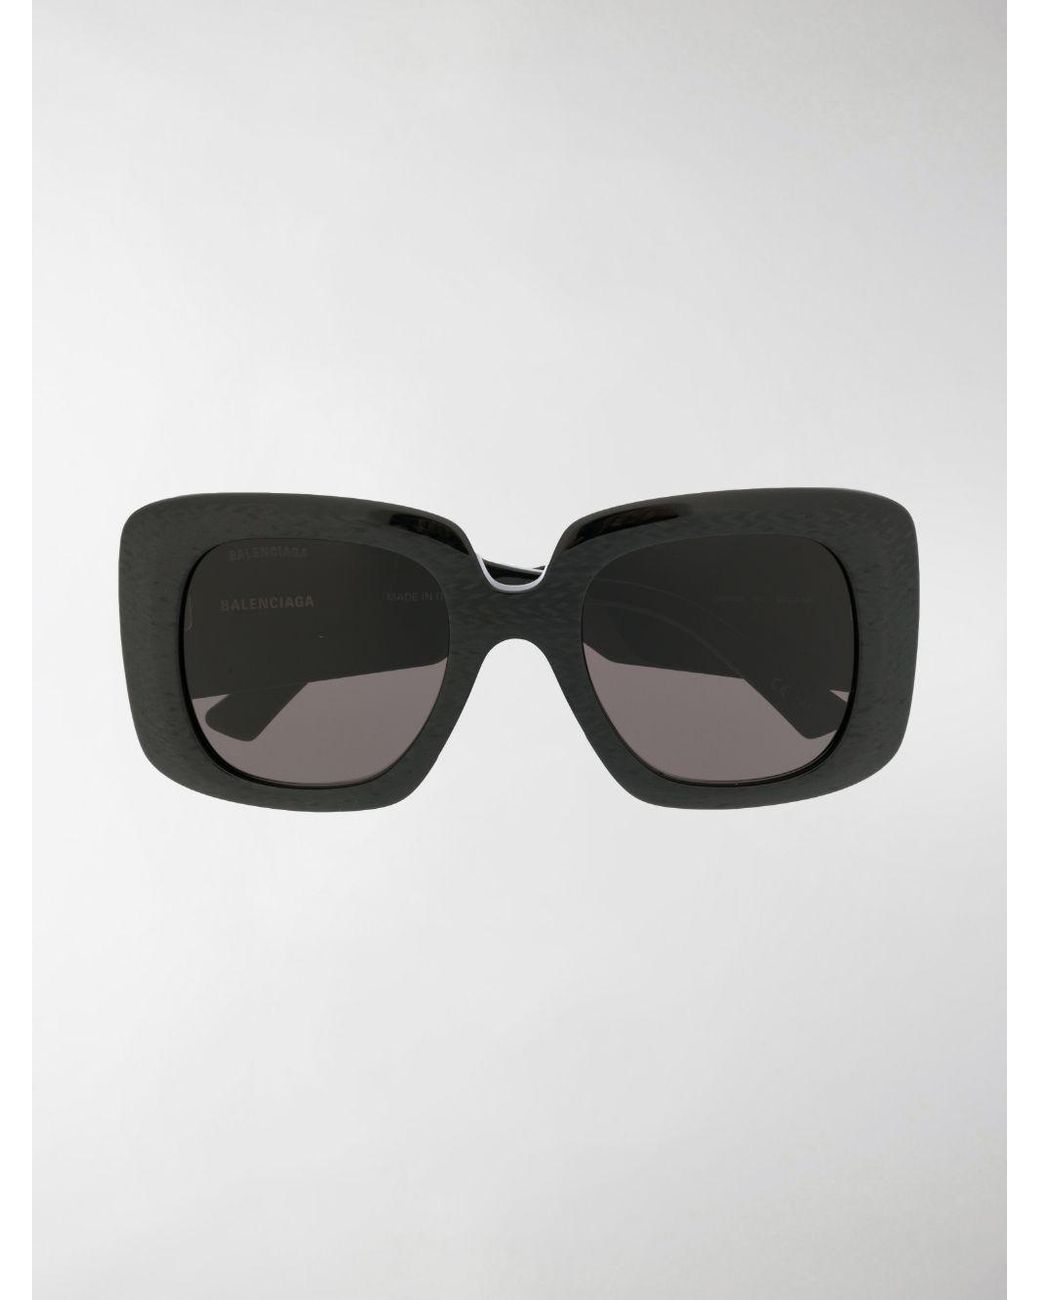 Balenciaga Oversized Square-frame Sunglasses in Black - Lyst